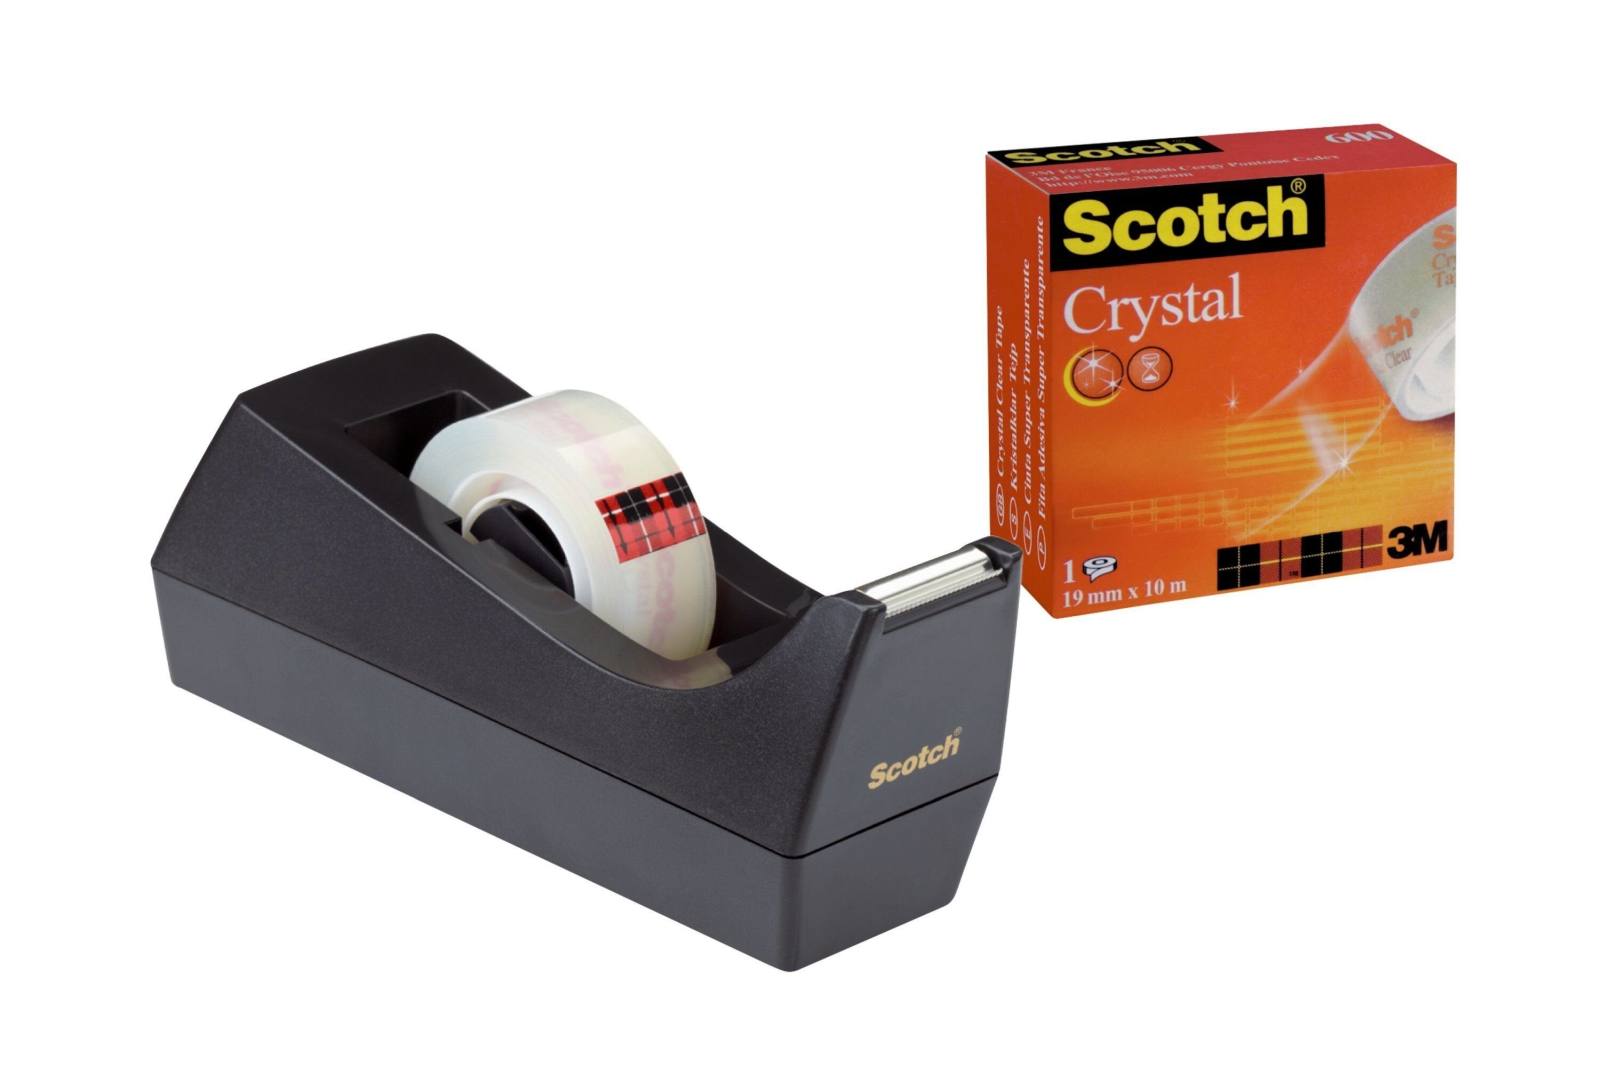 3M Scotch table dispenser 83980, 6.5 x 7 x 15 cm, black, 1 dispenser, 1 roll of adhesive tape